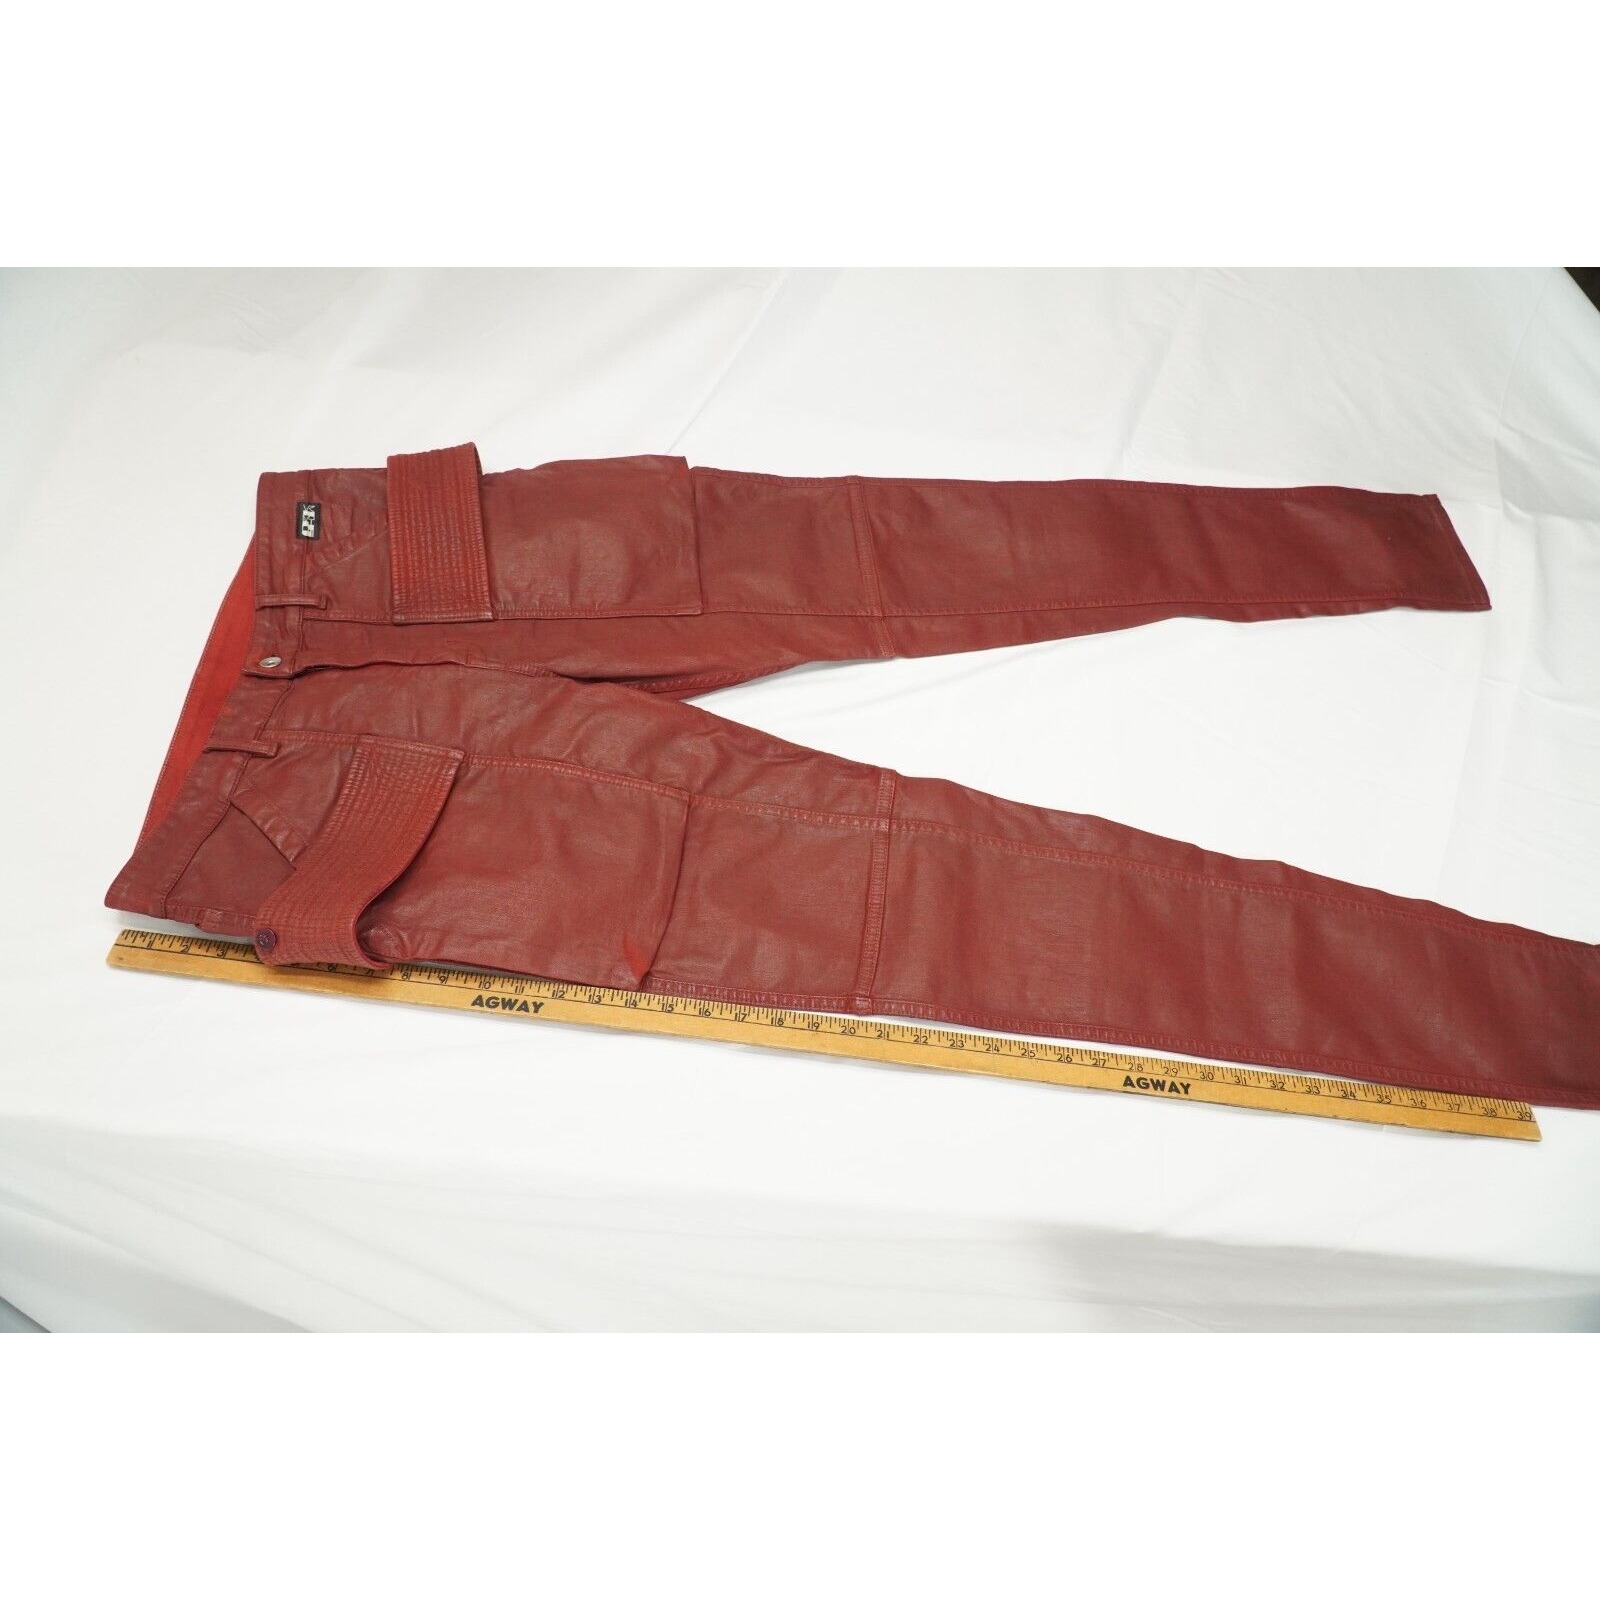 SS21 Easy Creatch Cut 33 Wax Trouser Cargo Pants Dark Cherry - 17